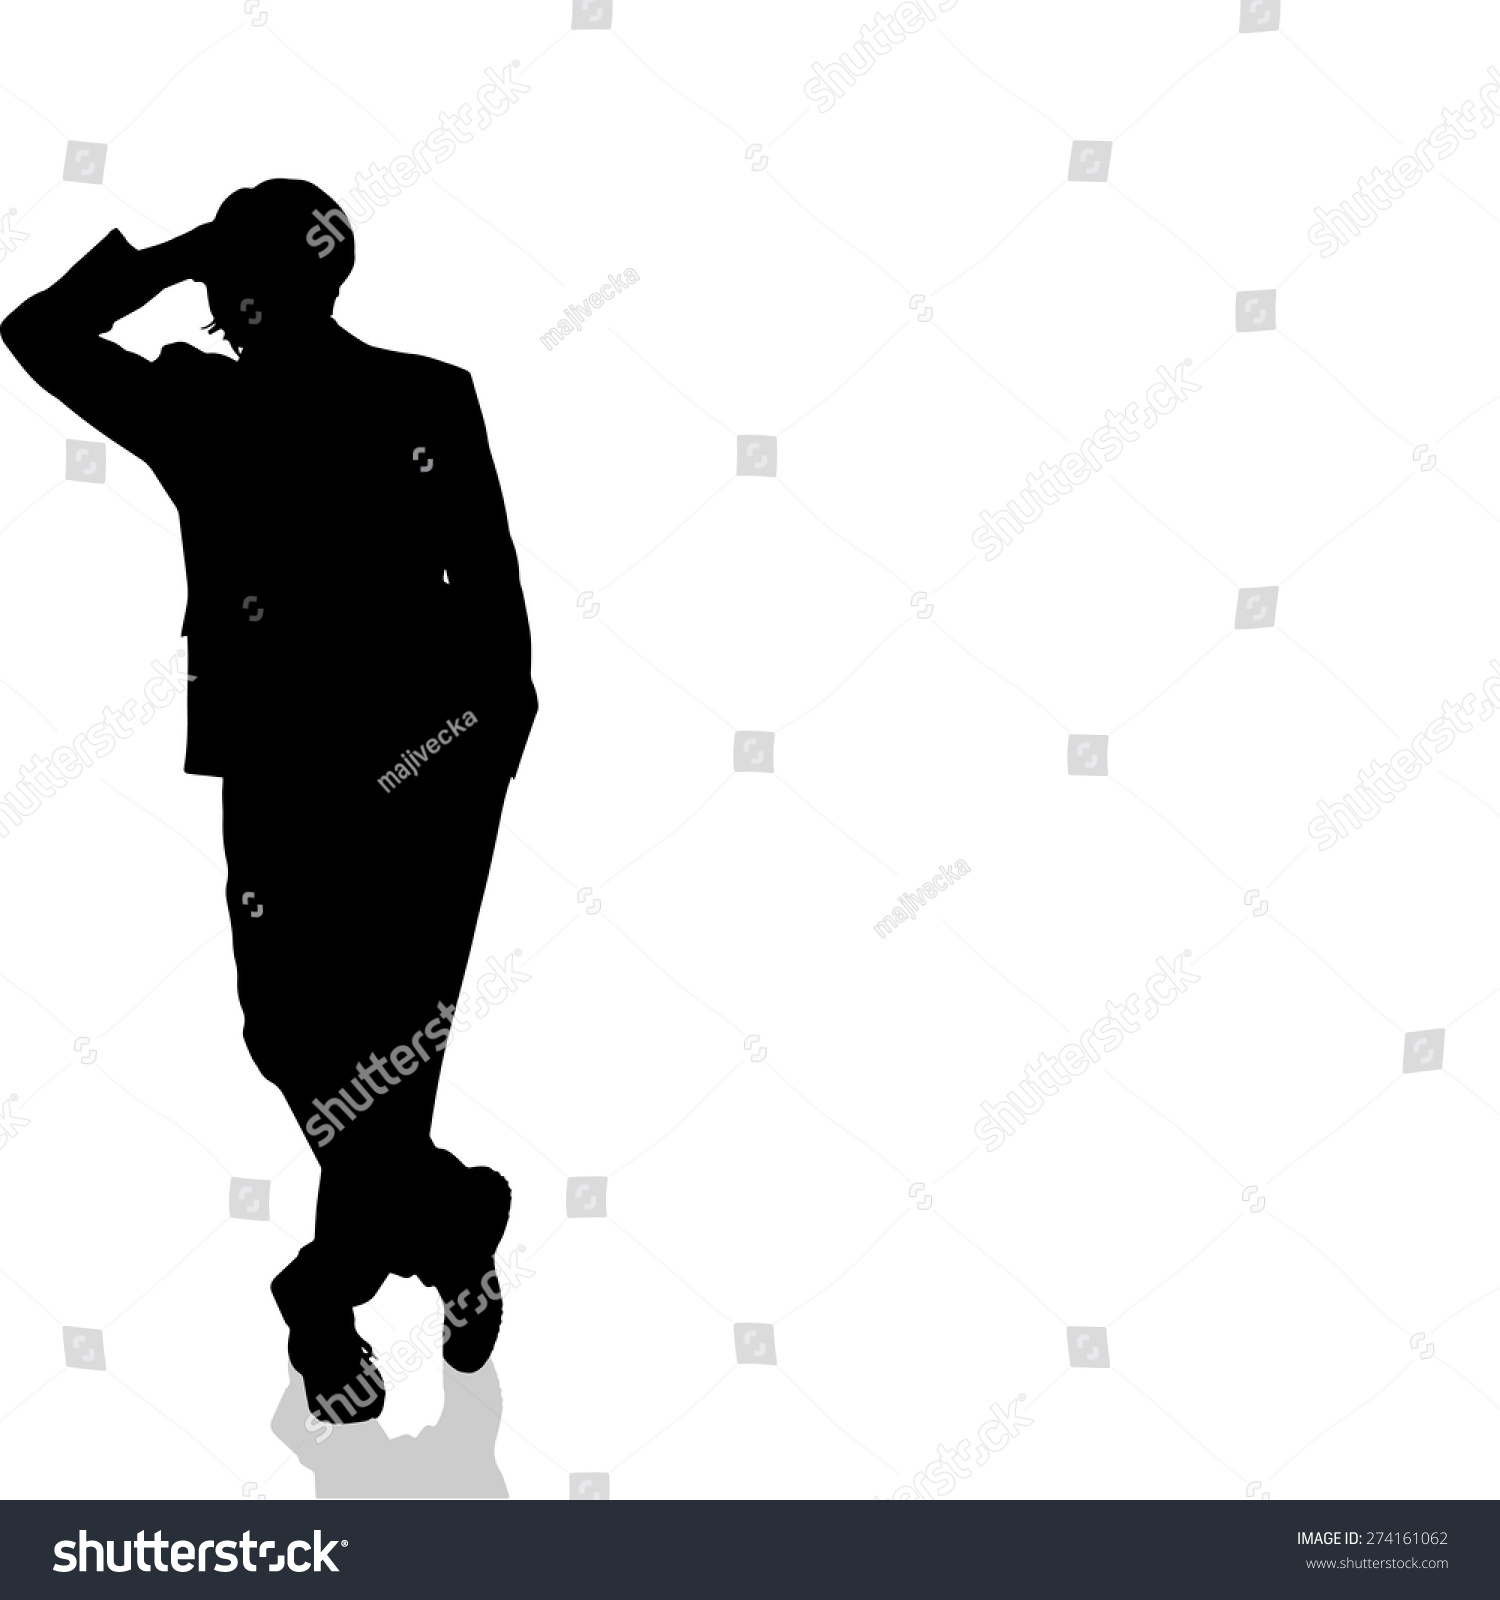 Vector Silhouette Man On White Background Stock Vector 274161062 ...